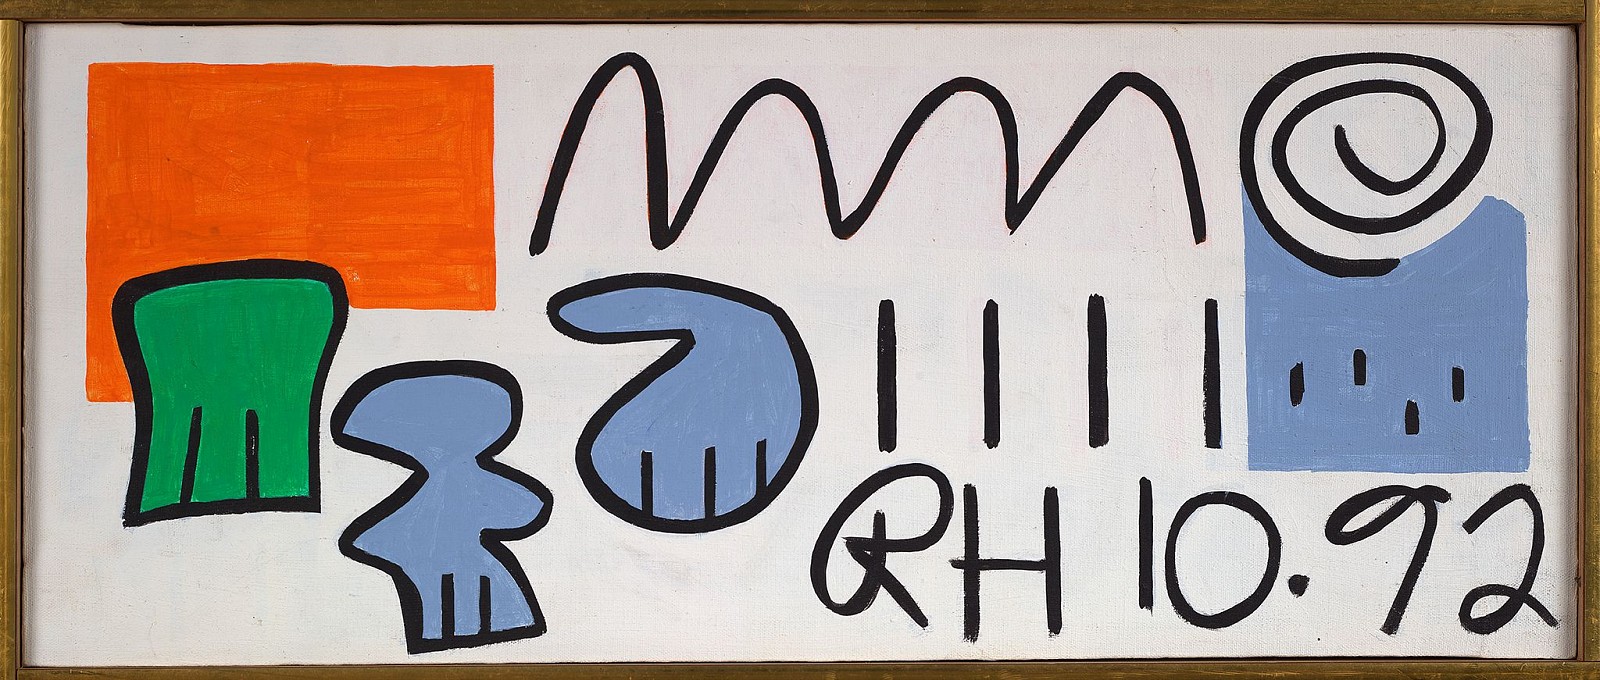 Raymond Hendler, RH 10.92, 1992
Acrylic on canvas, 11 x 27 in. (27.9 x 68.6 cm)
© Estate of Raymond Hendler
HEN-00215